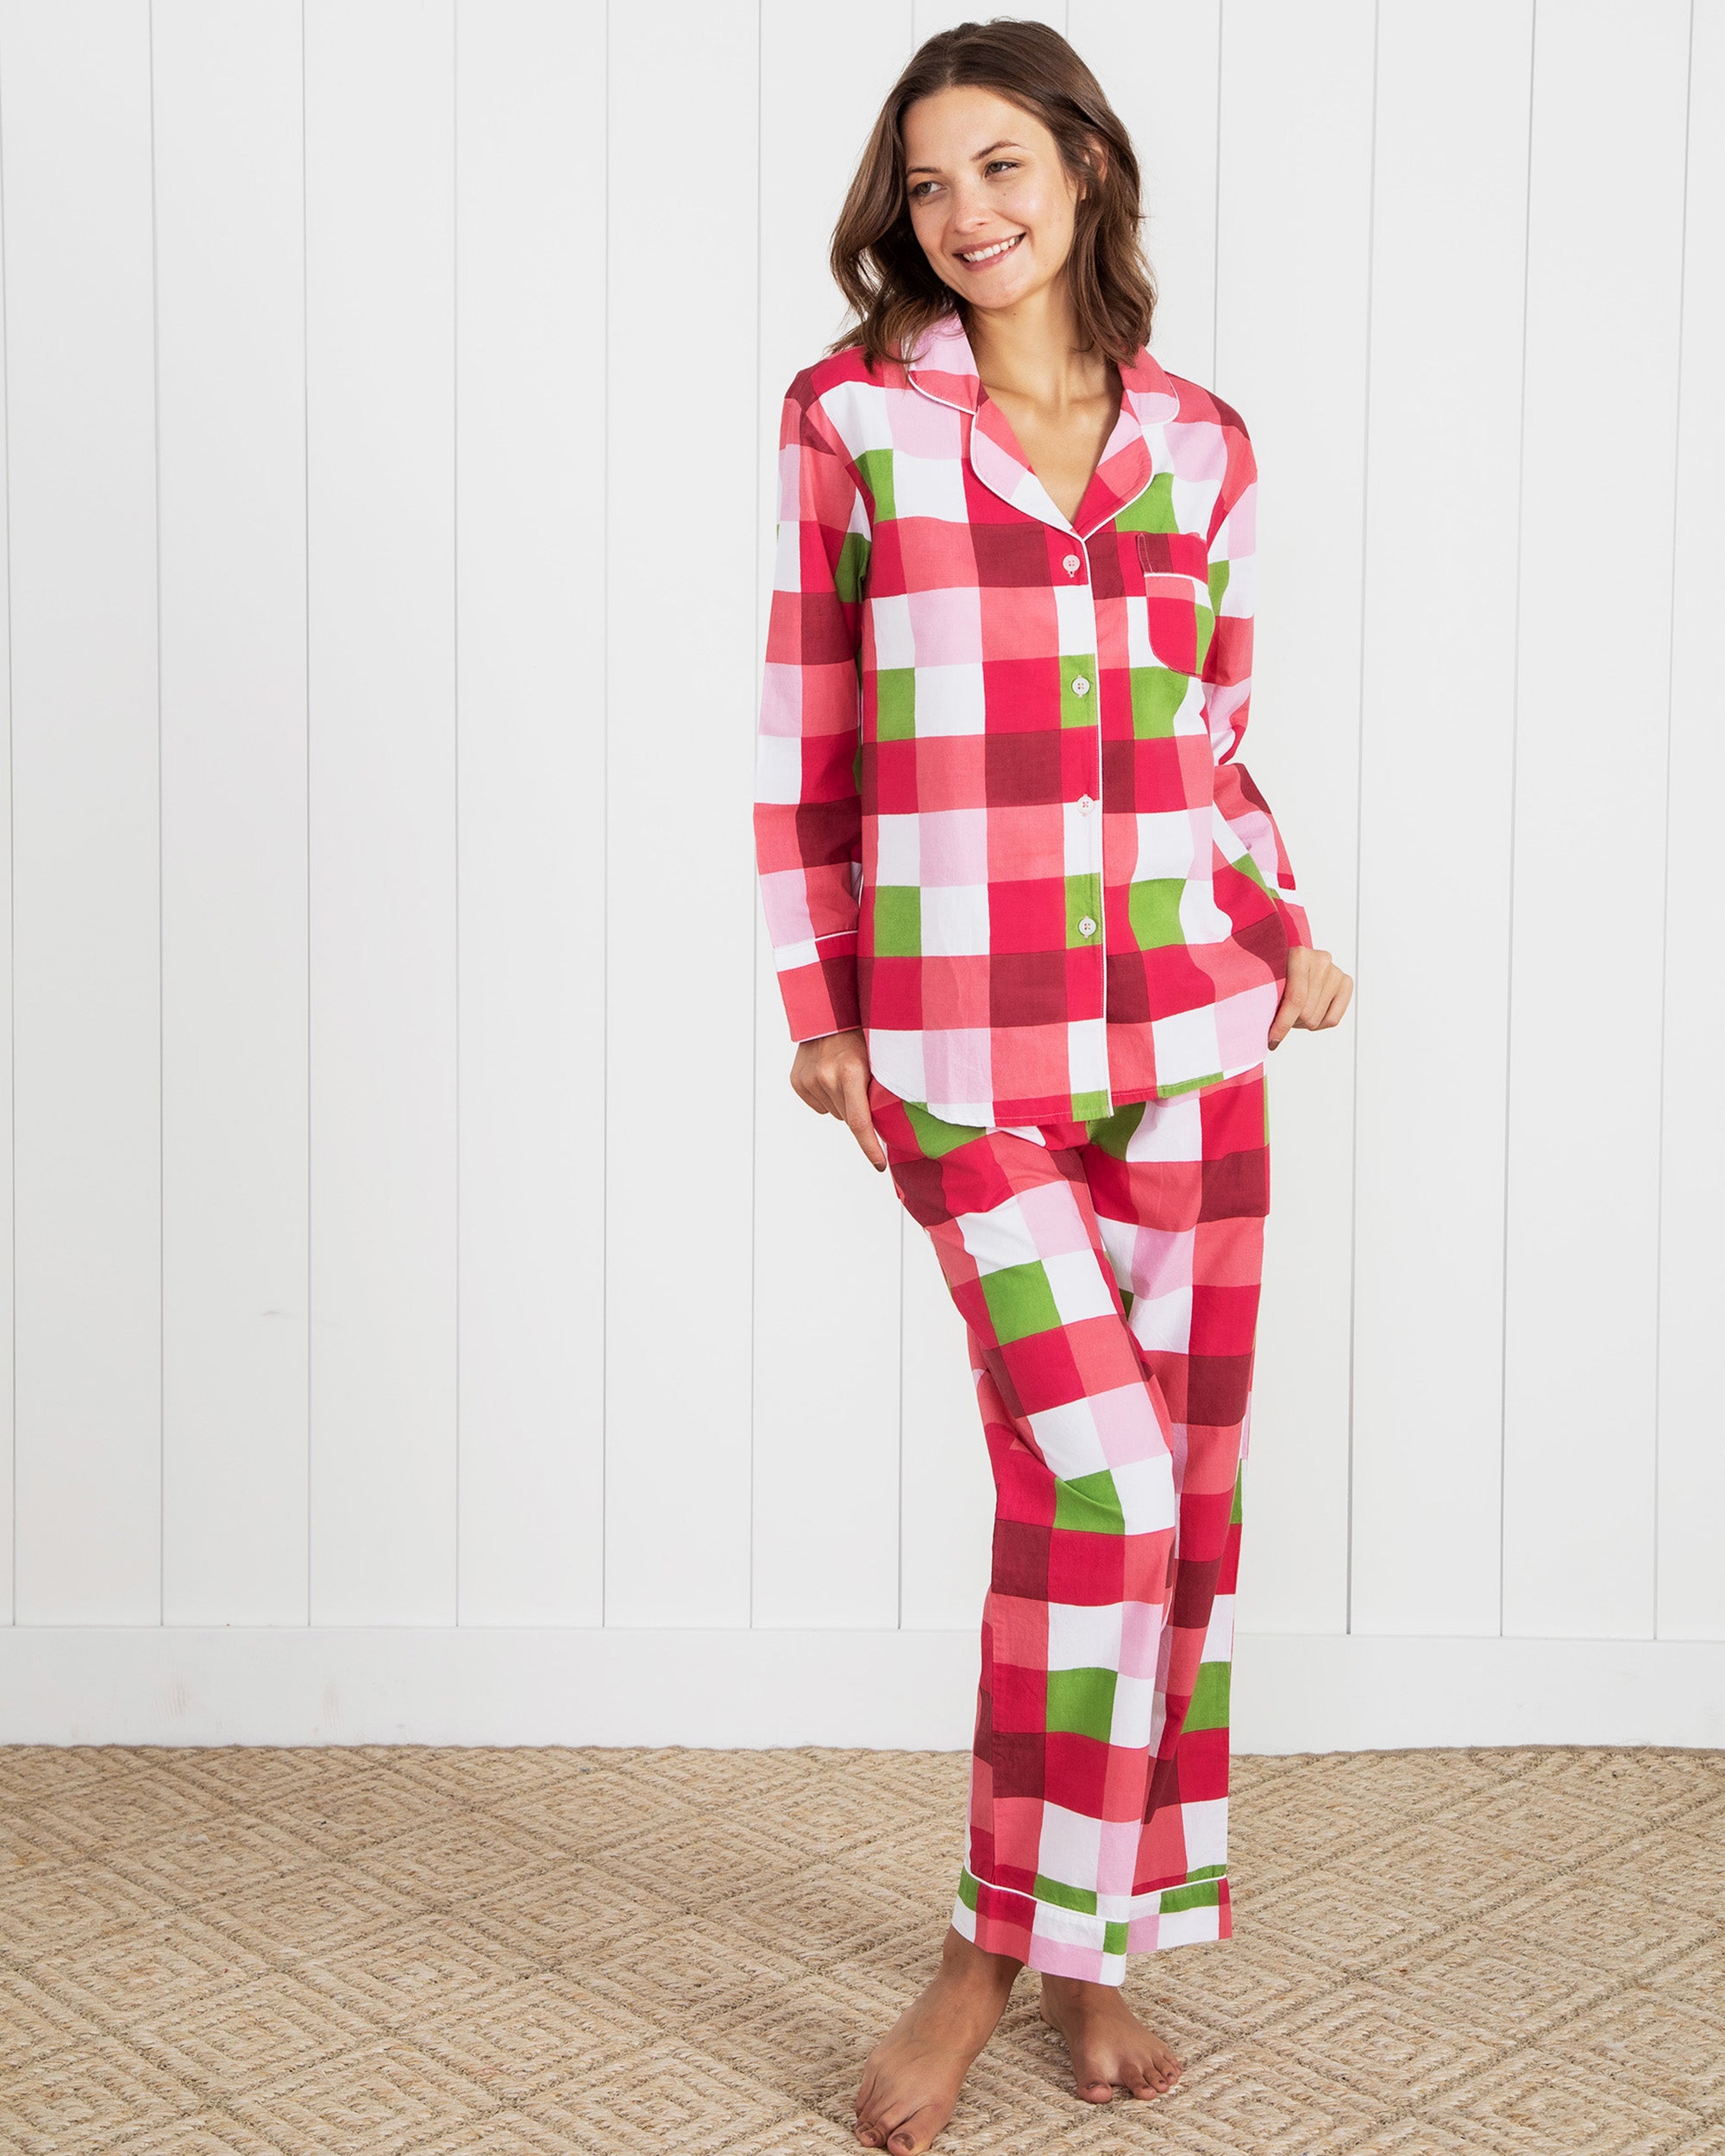 Famulily Women Comfy Pajamas Ladies Pyjamas Set Floral Printing Long Sleeve  Loungewear Top and Wide Leg Pants Pjs Set Soft Nightwear Sleepwear Blue S :  : Clothing, Shoes & Accessories